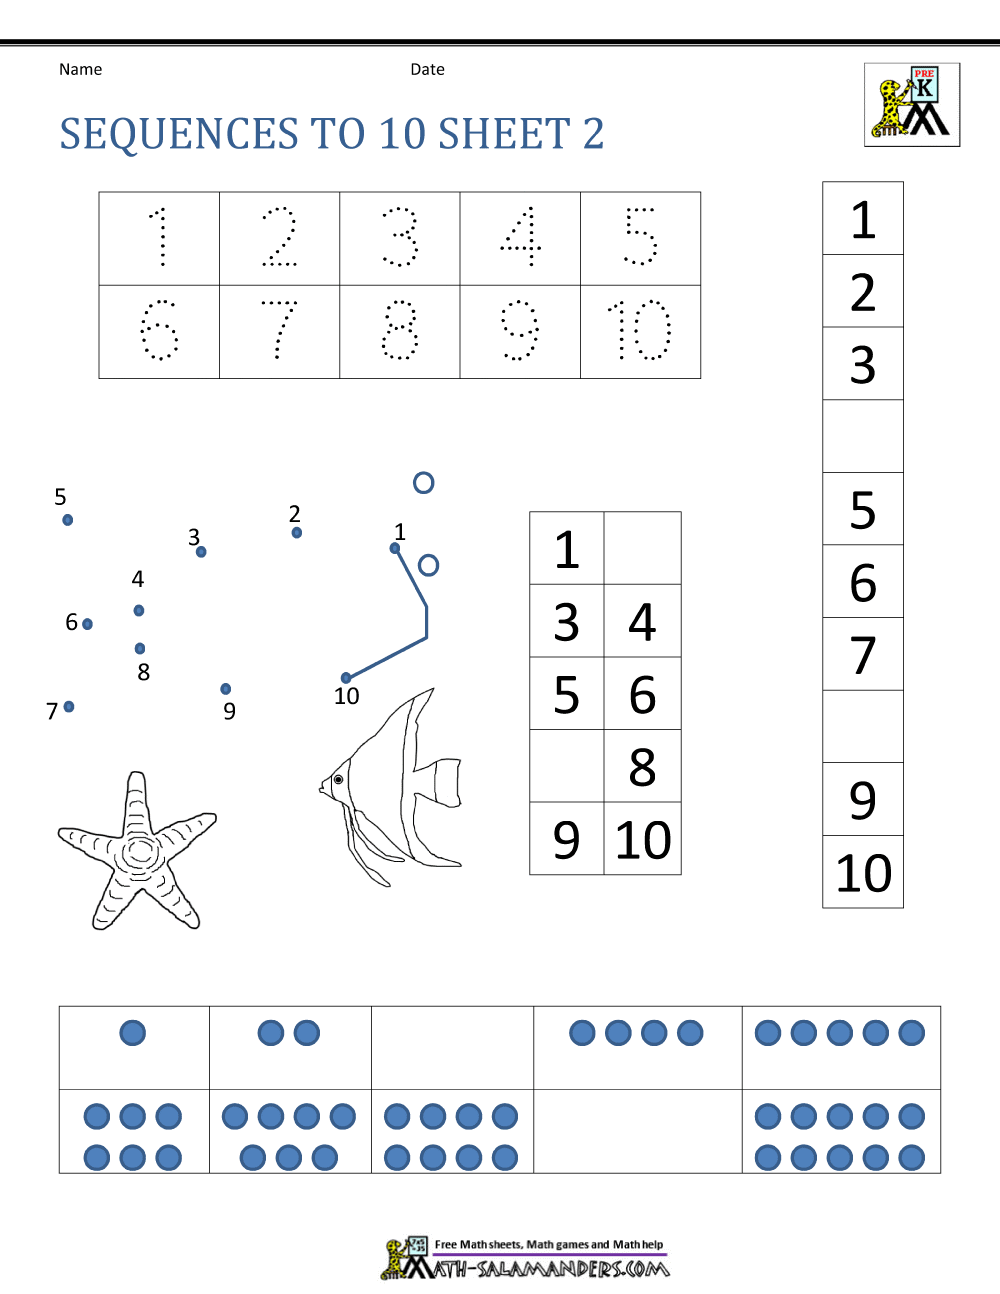 Preschool Number Worksheets - Sequencing to 10